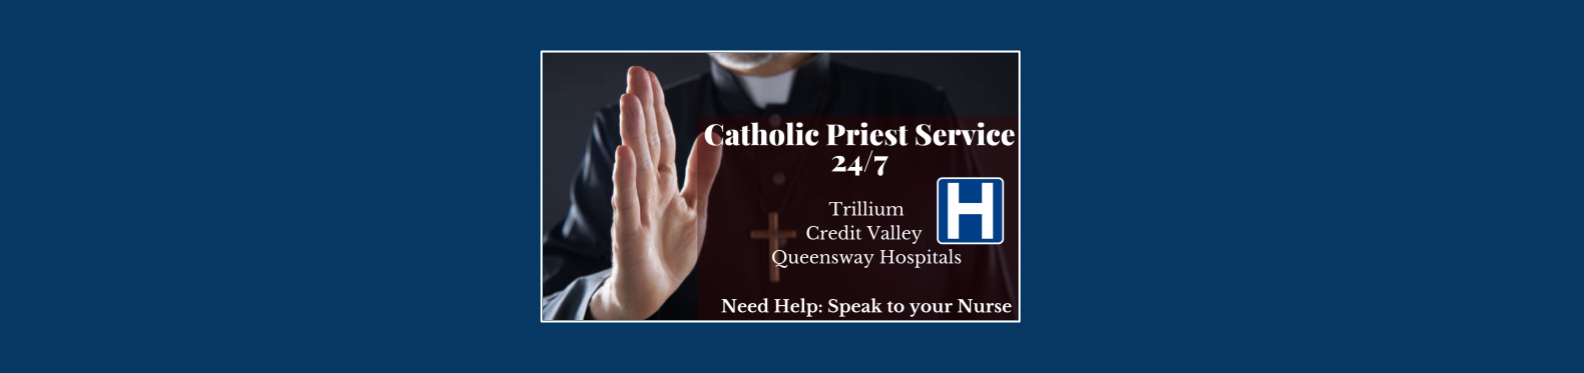 Catholic Priest Service 24/7